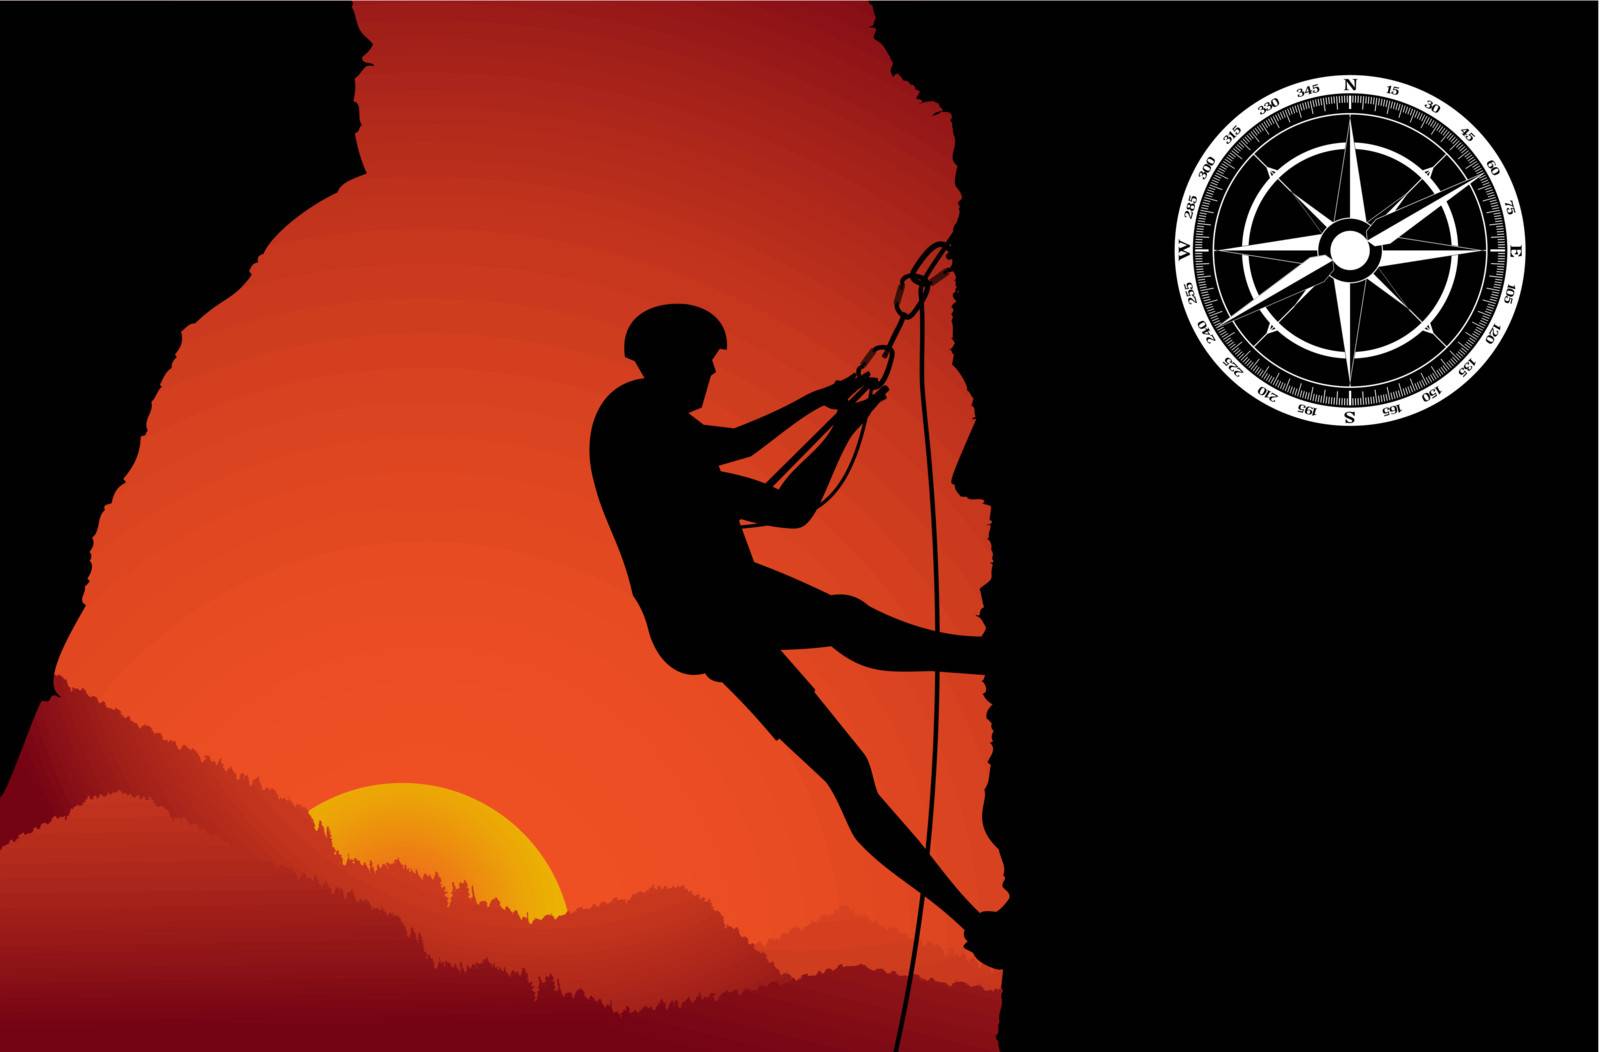 Mountain climber silhouette vector by krabata